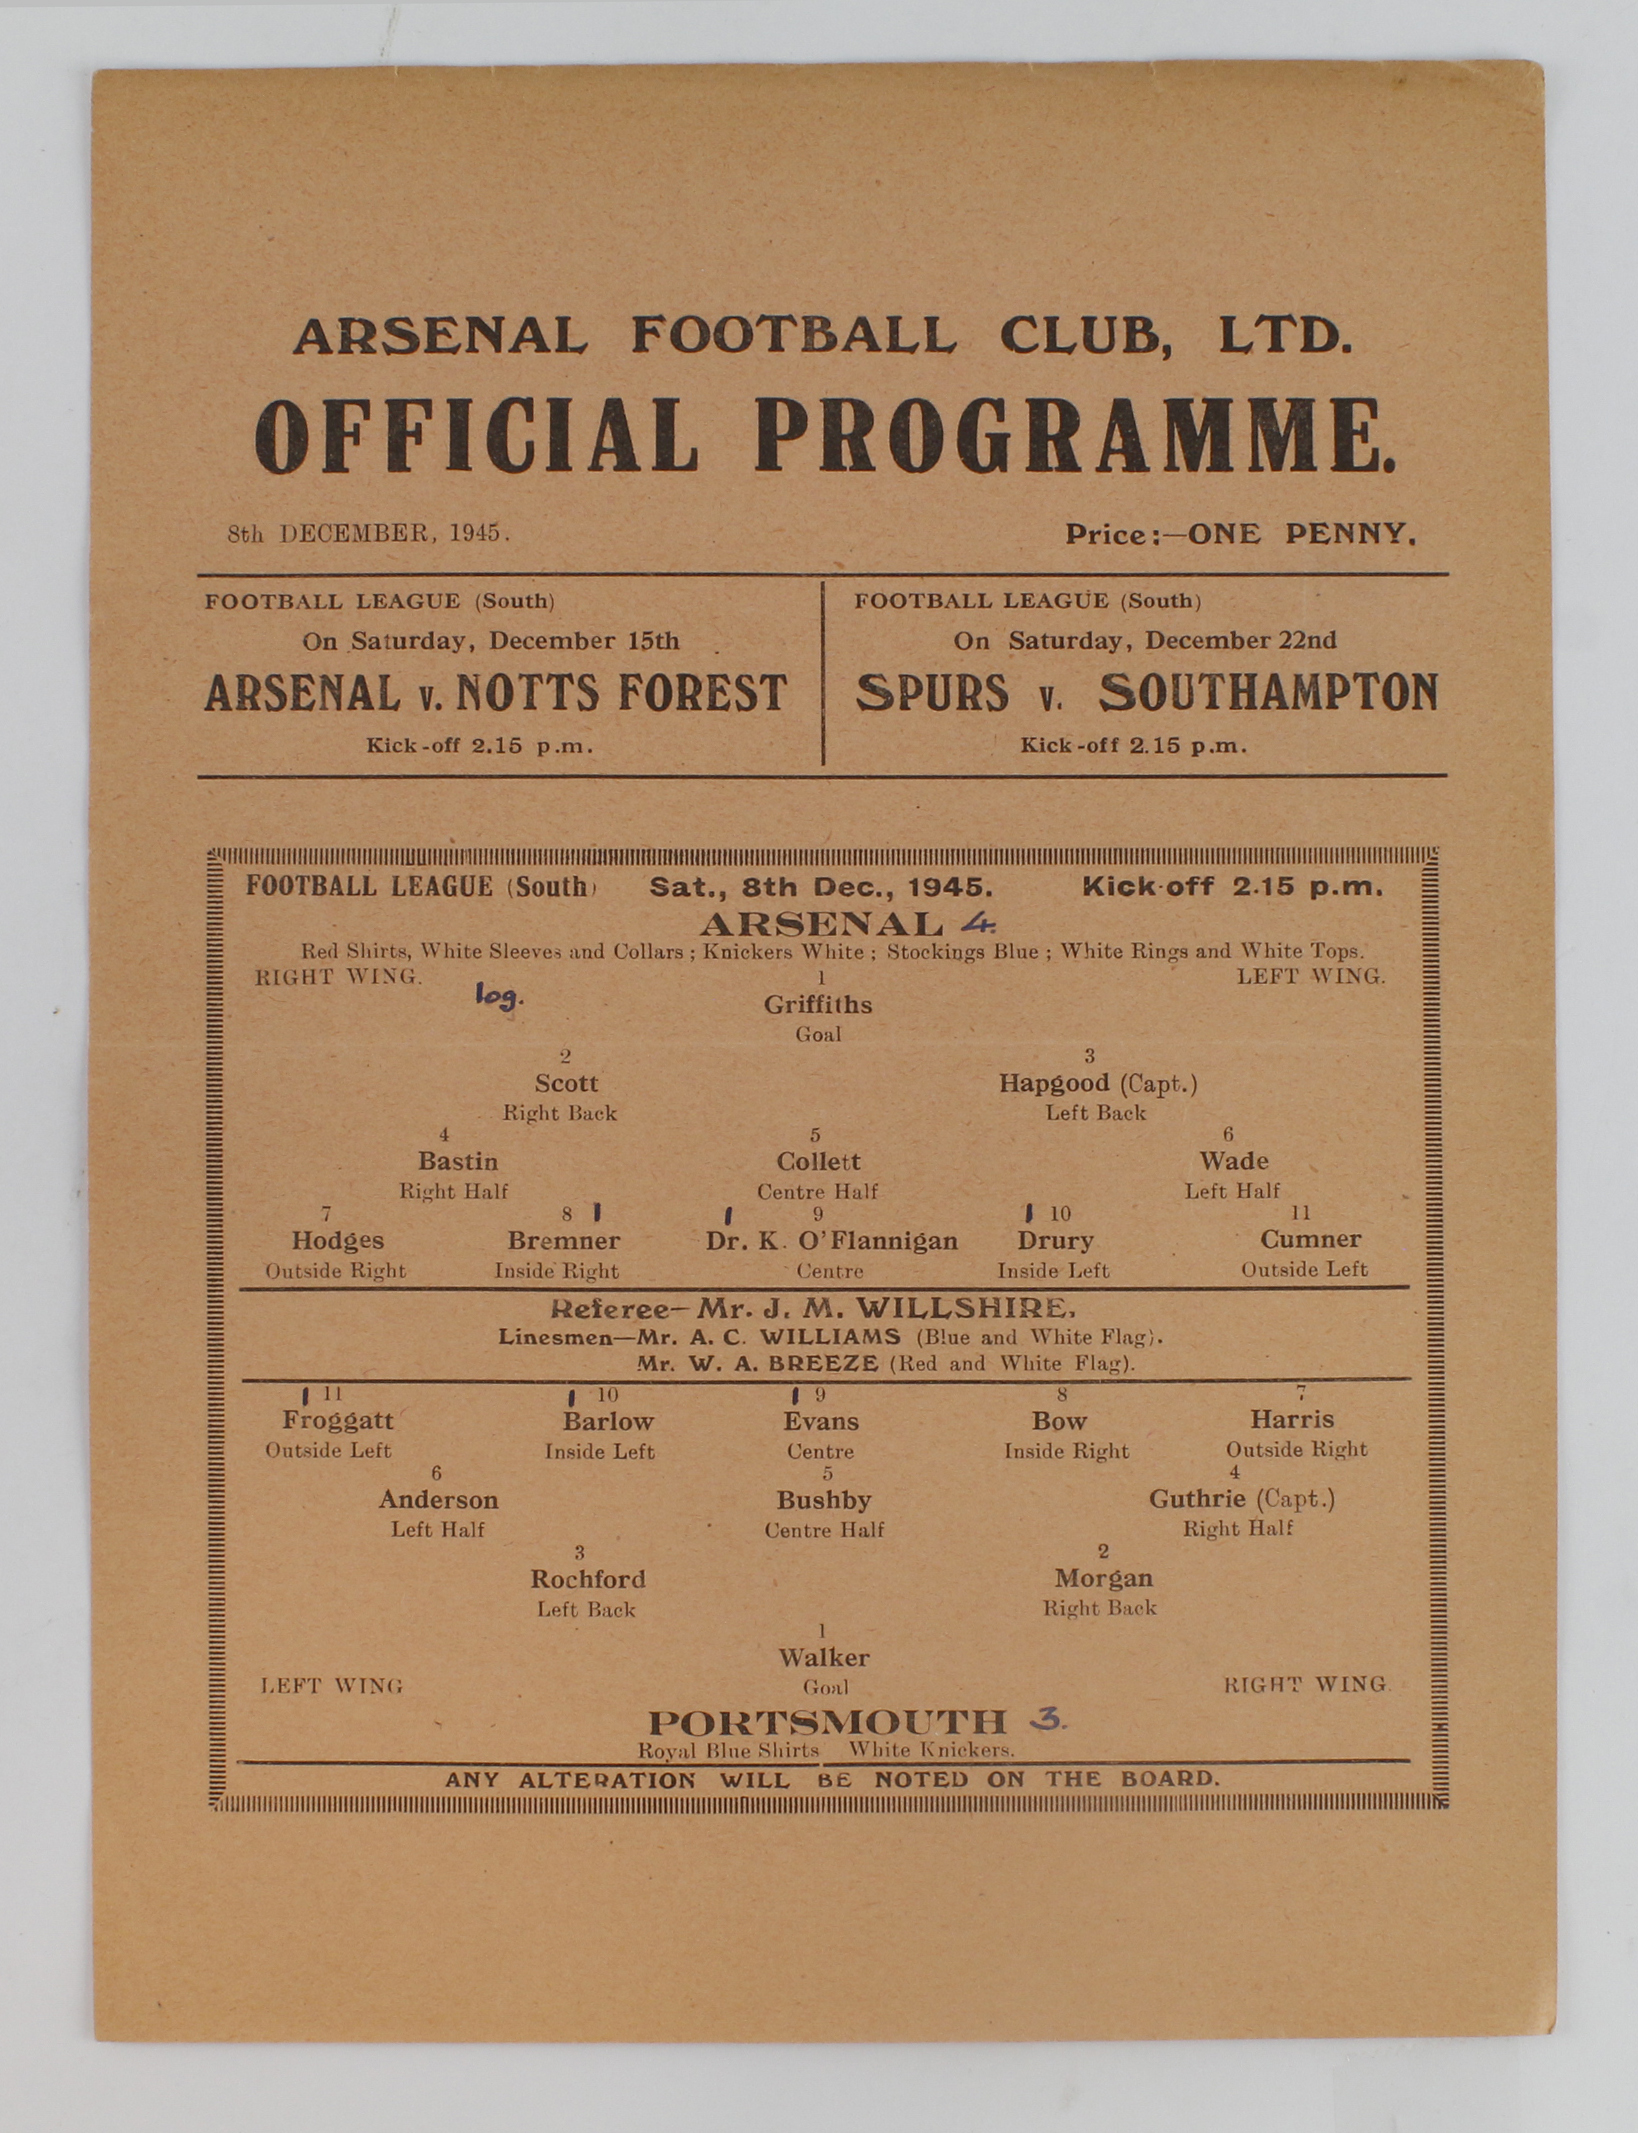 Football programme Arsenal v Portsmouth 8th Dec 1945 F/L South single sheet